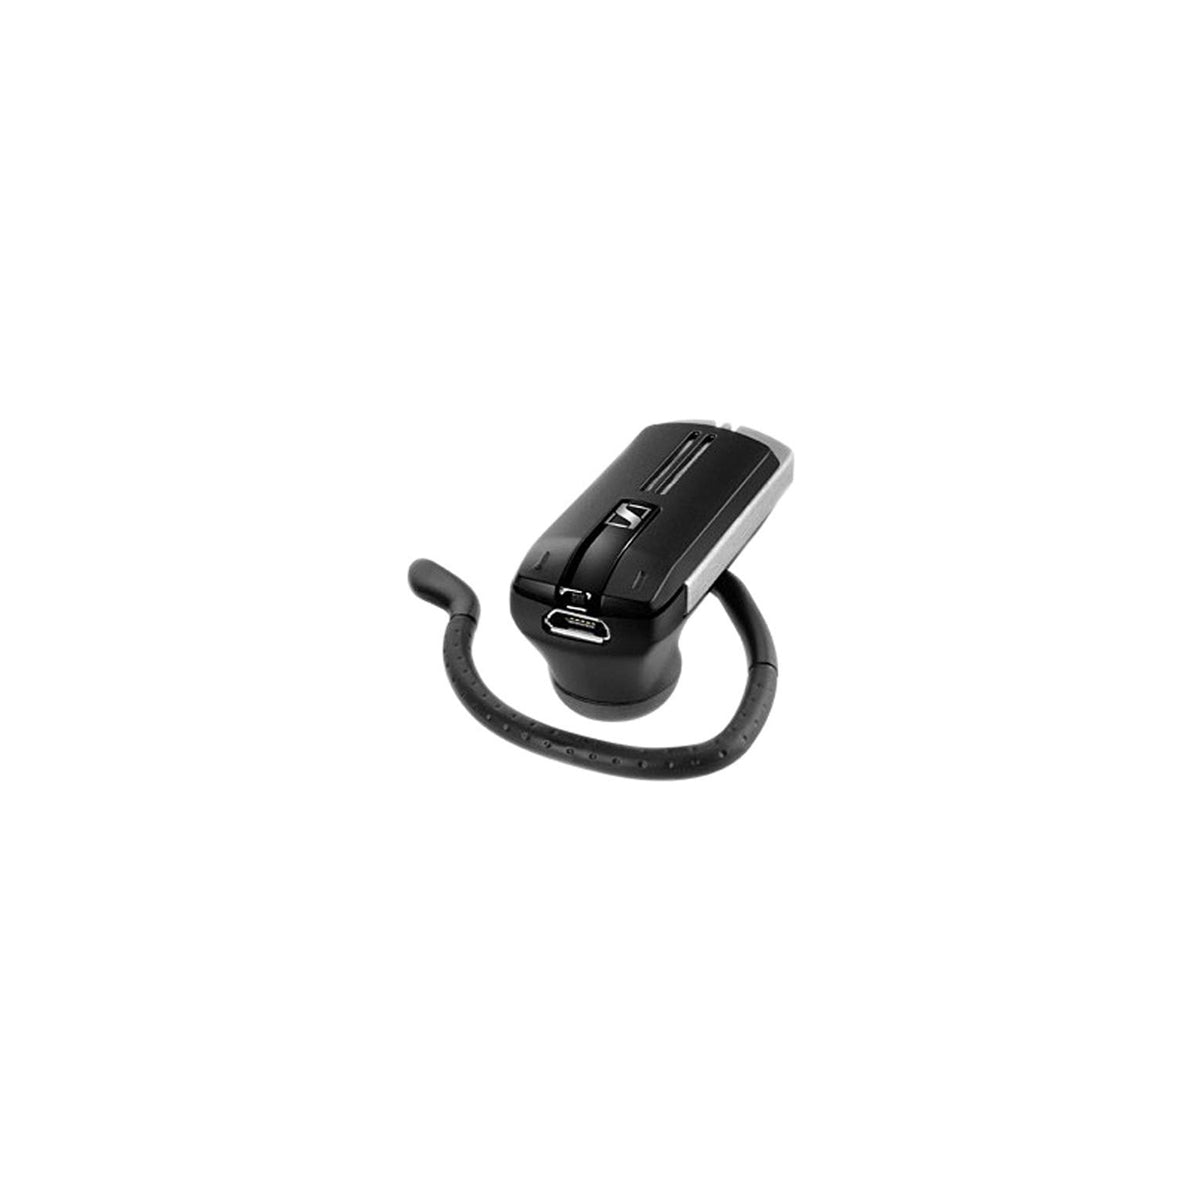 Sennheiser PRESENCE Business Bluetooth Headset, ActiveGard, SpeakFocus, WindSafe, USB Charging Cable